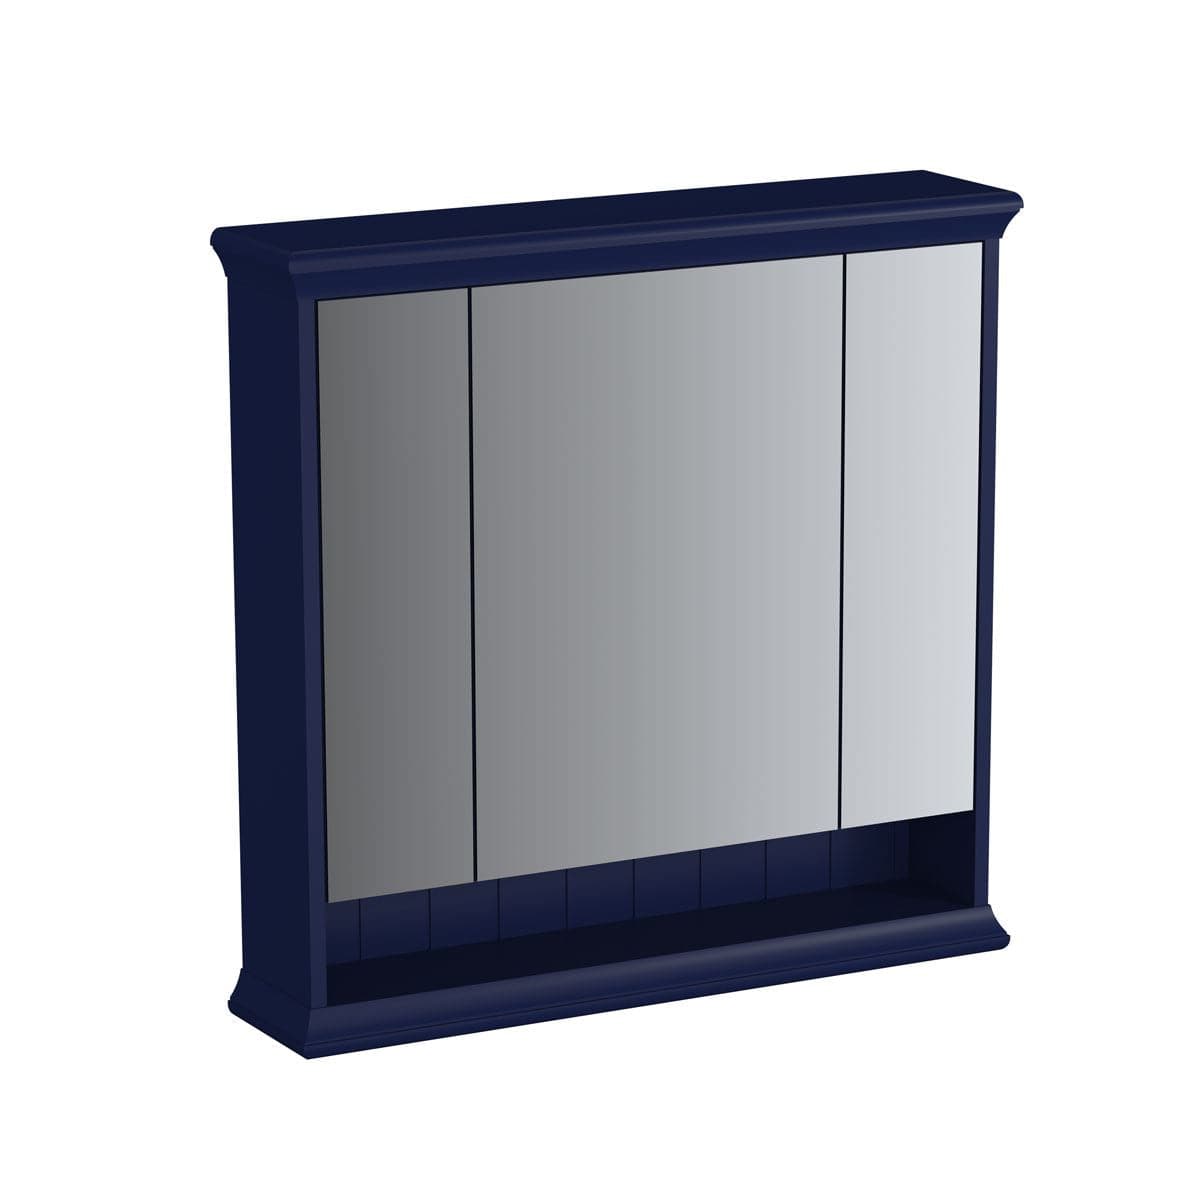 VitrA Valarte LED-Spiegelschrank 78 cm 3 Türen Stahlblau (Lack)